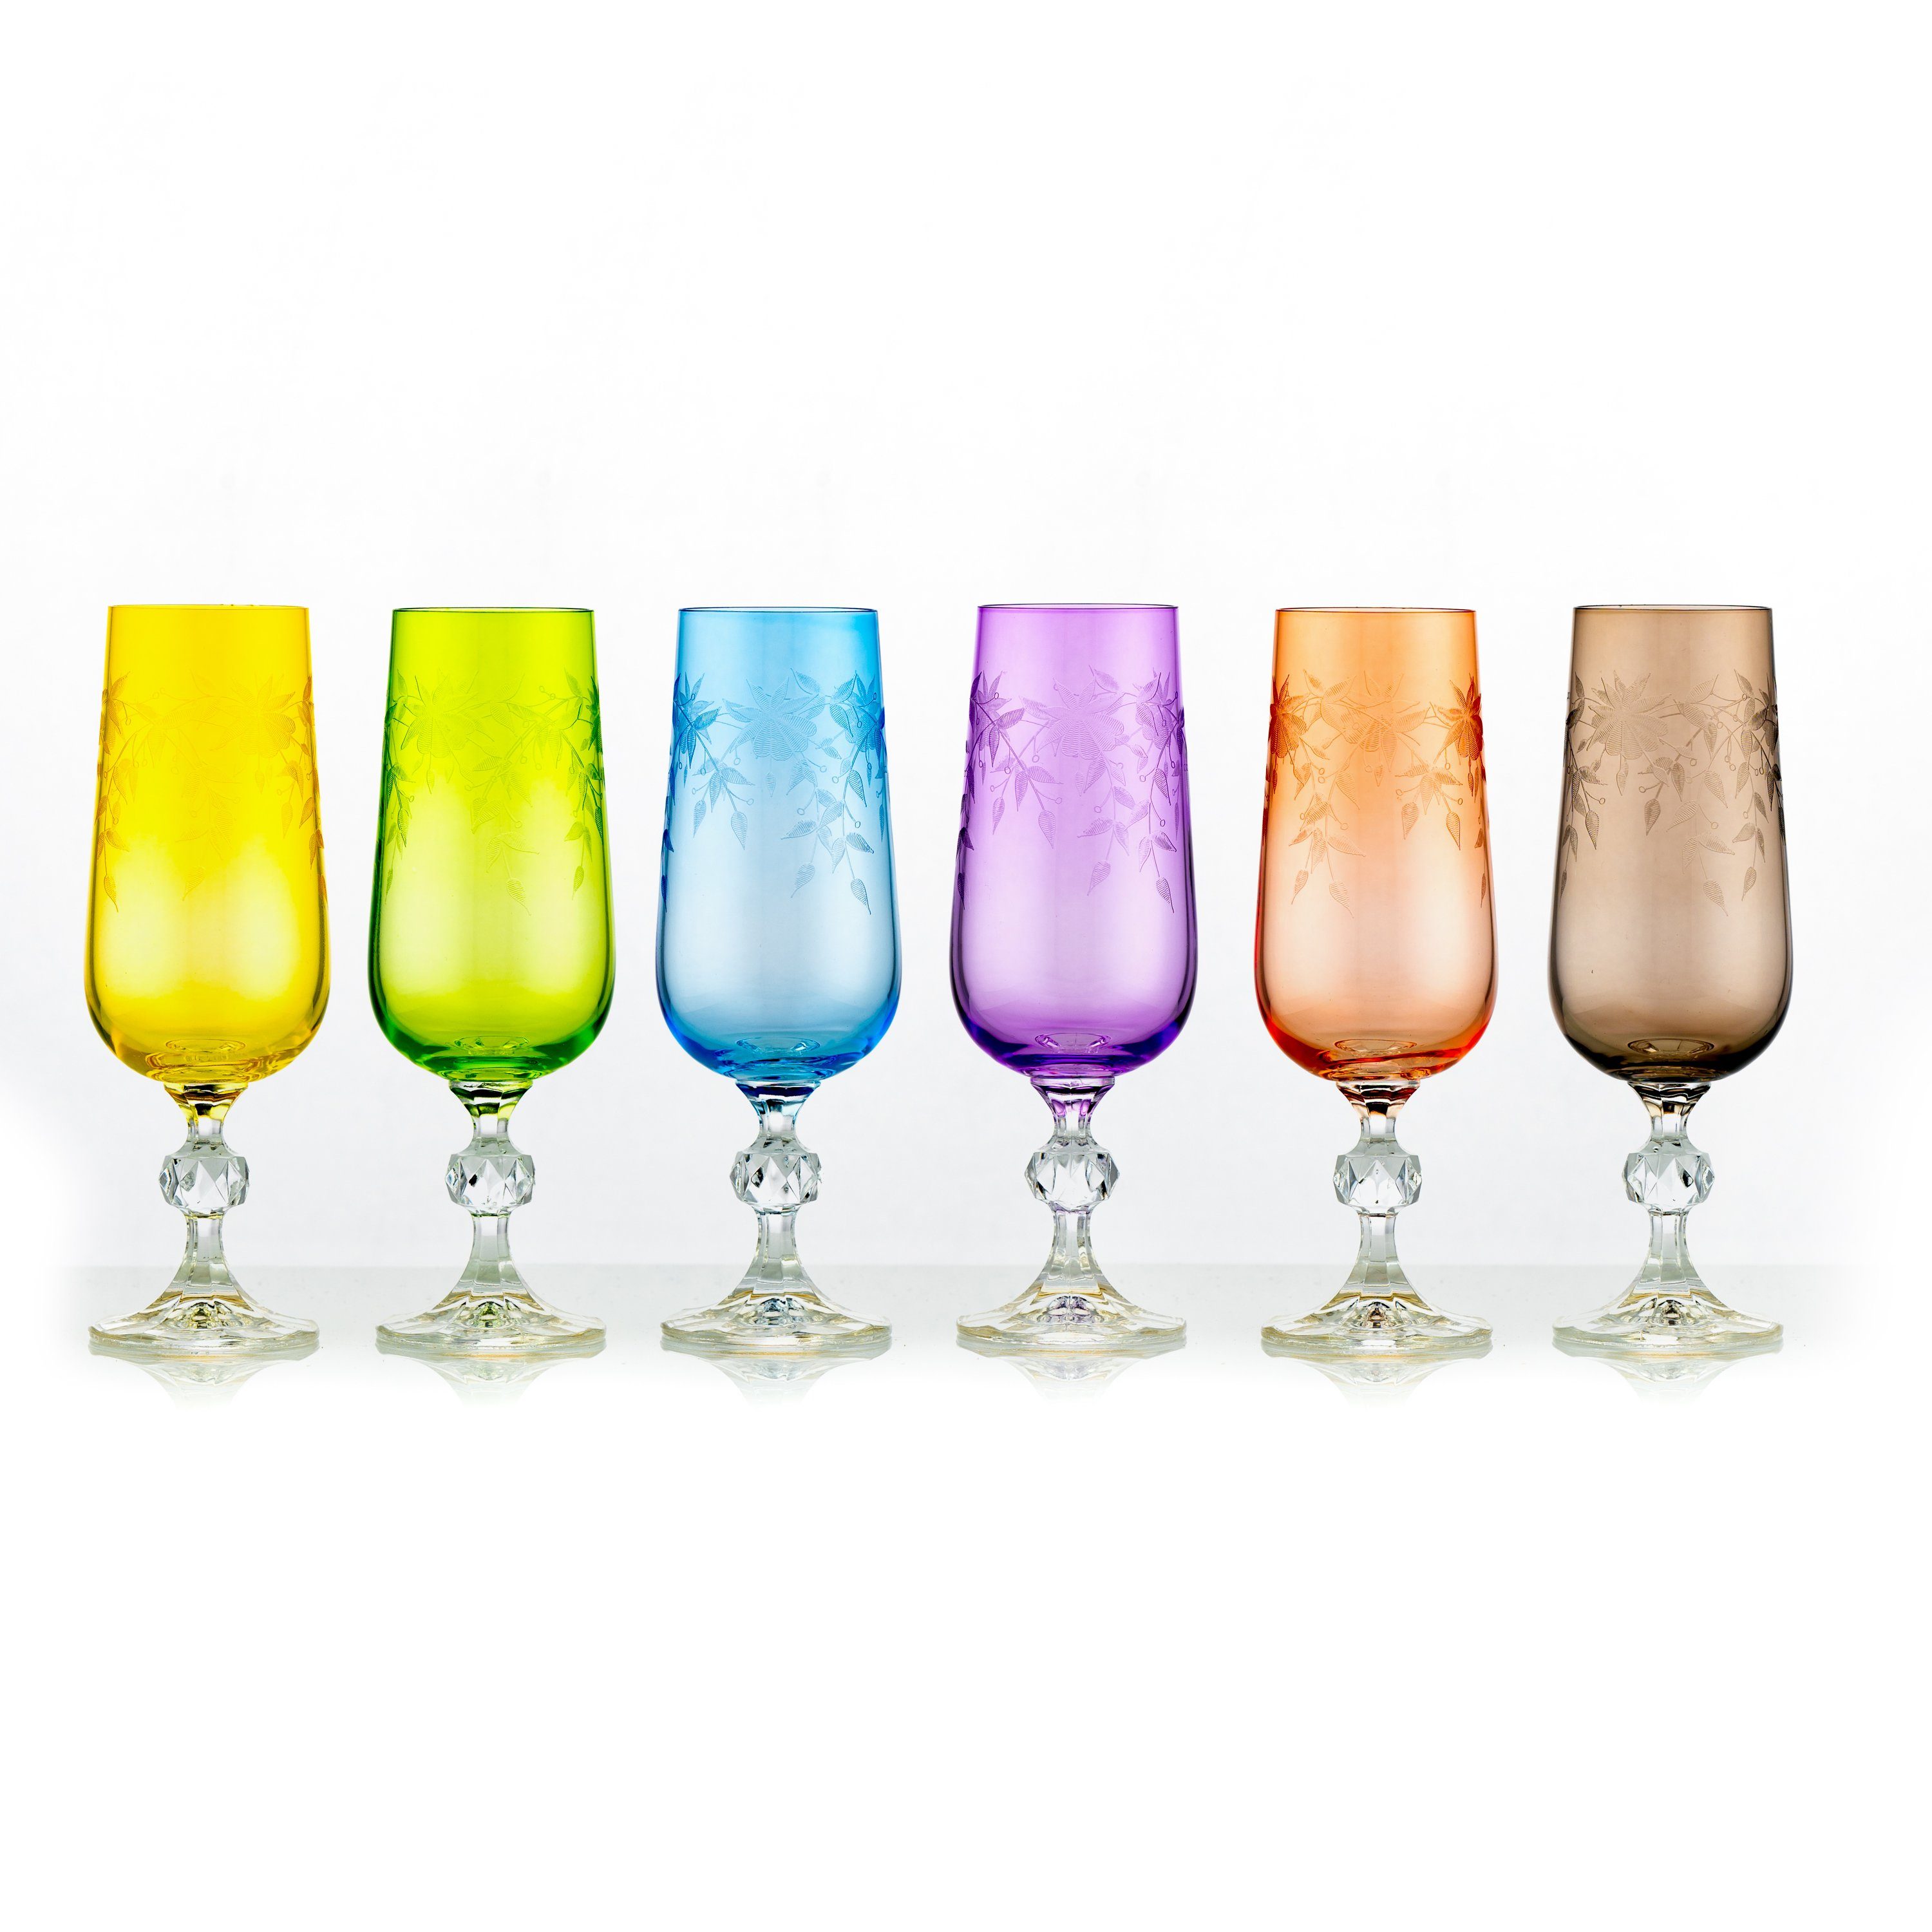 Crystalex Sektglas Floral Claudia Келихи для шампанського 180 ml 6er Set, Kristallglas, Gravur, Farbig: grün, gelb, blau, rot, lila, grau